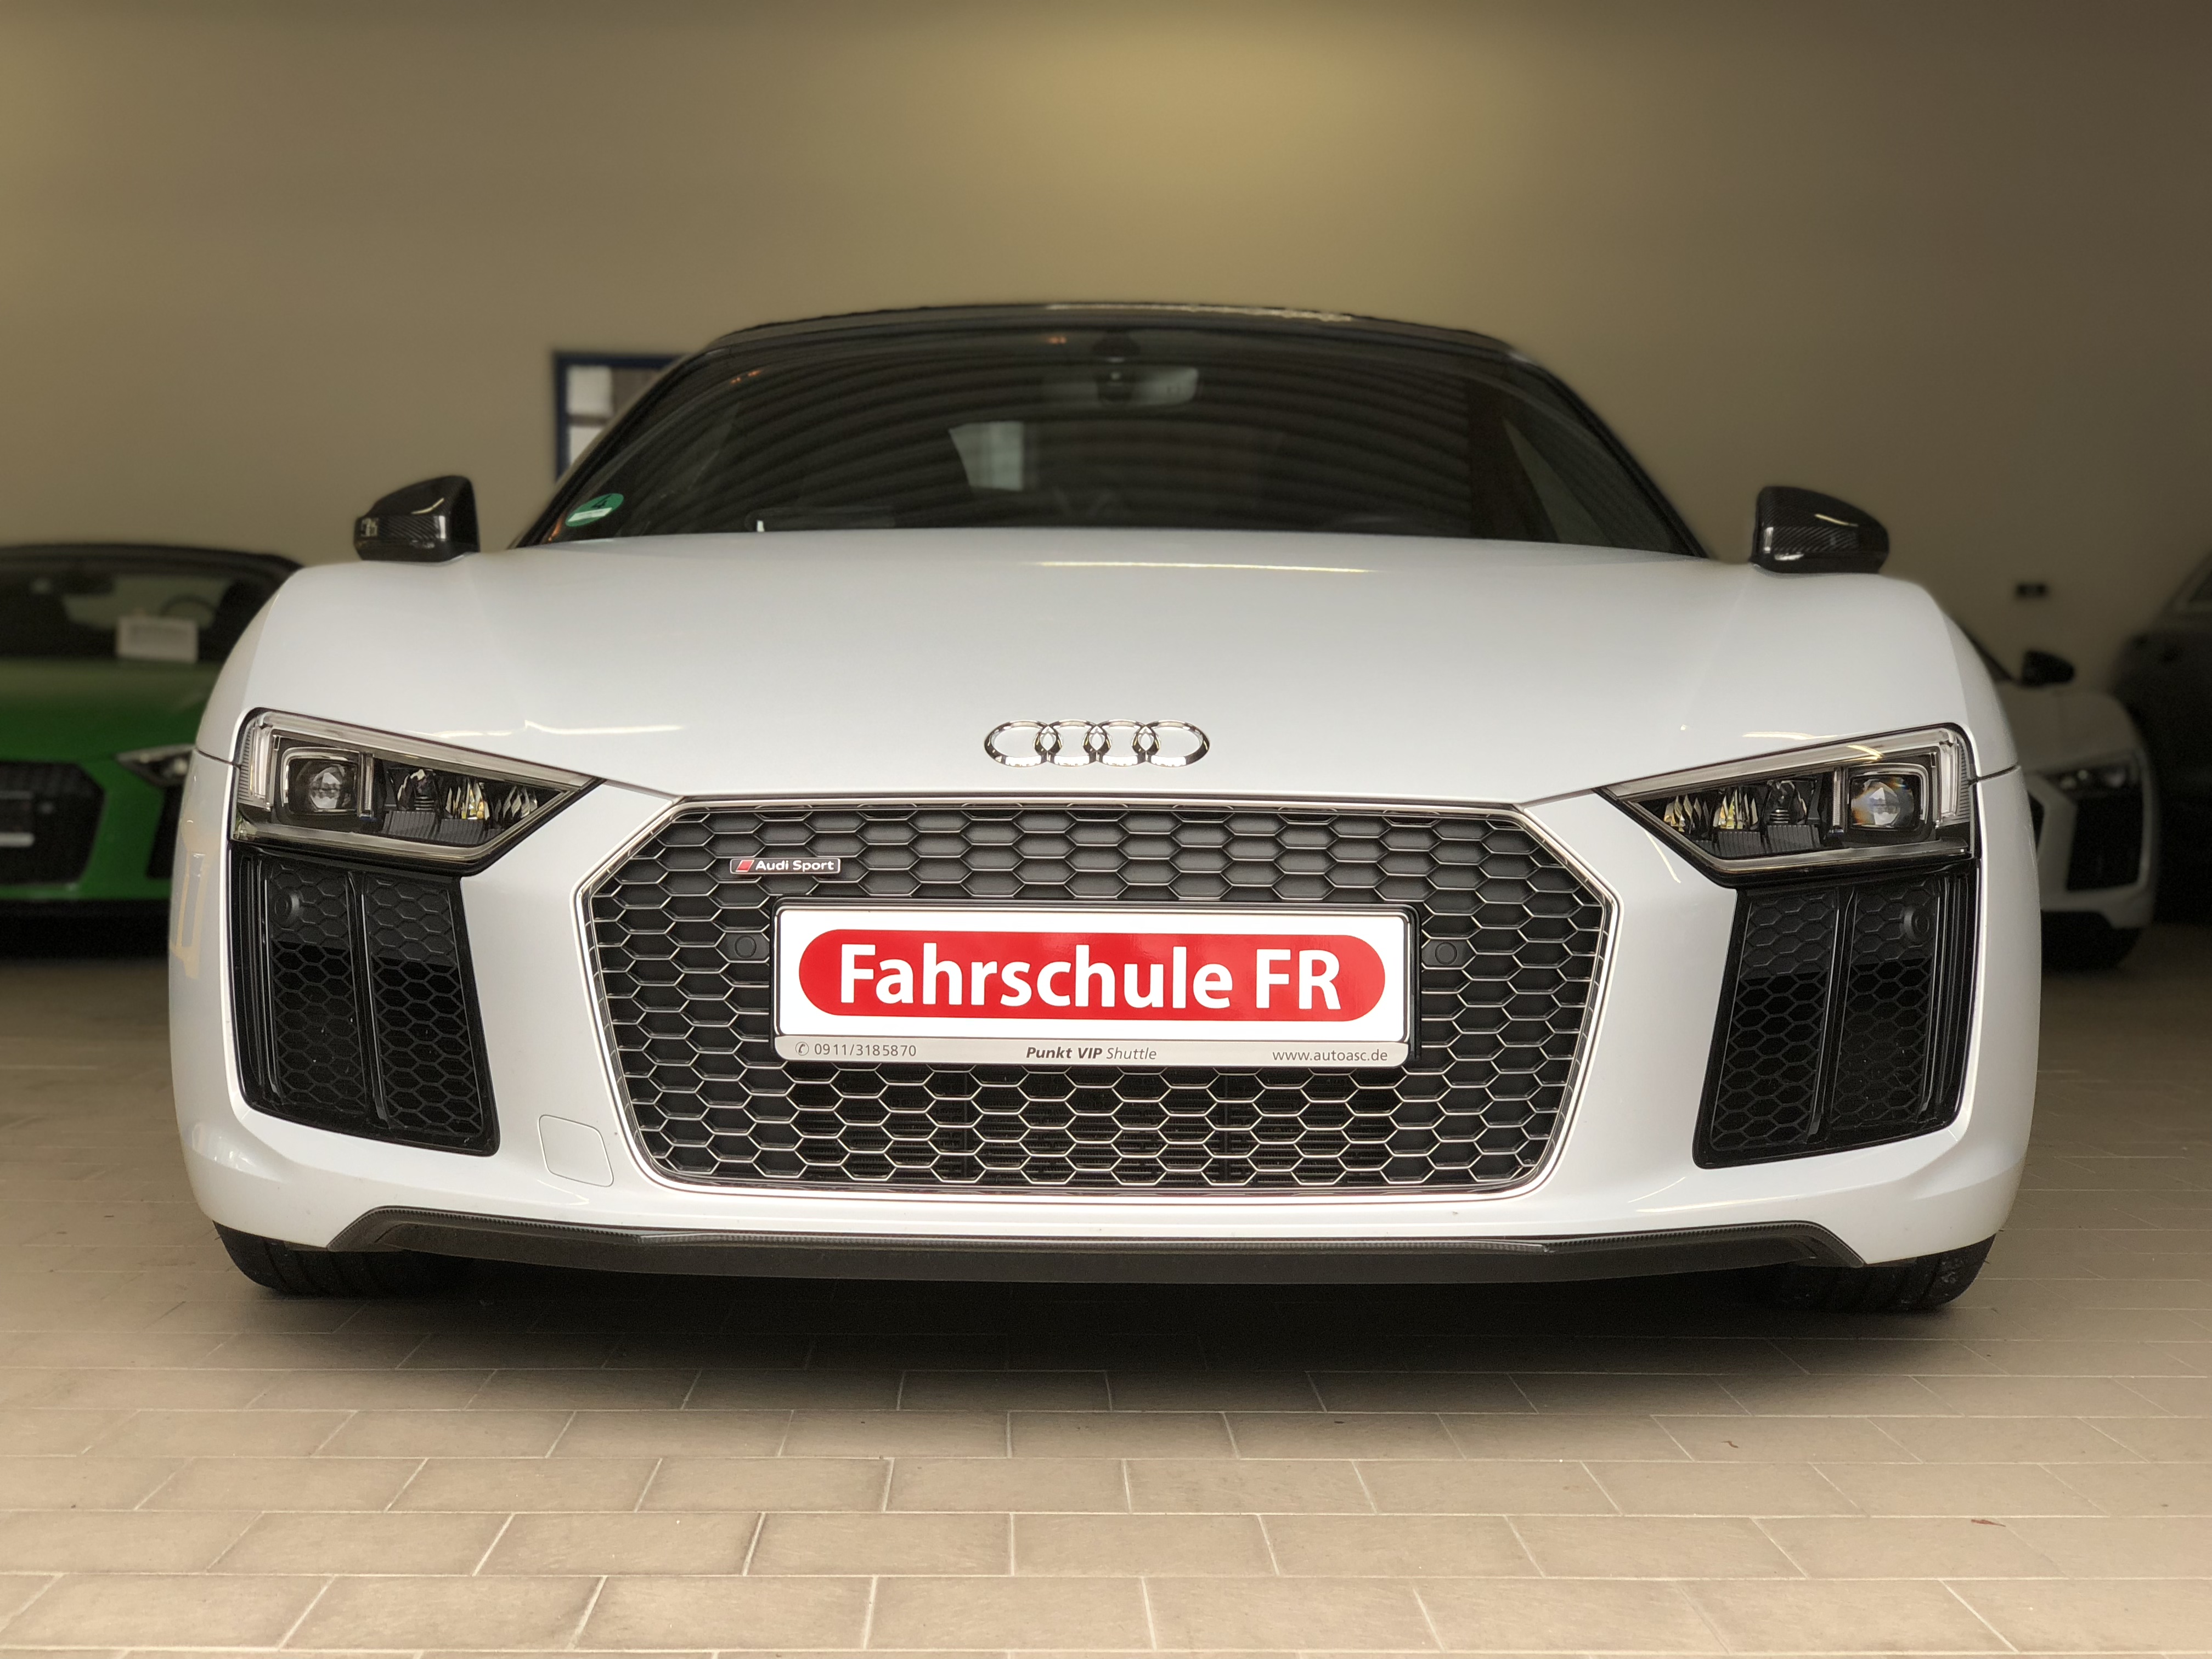 NEU: Audi R8 – Die Erlebnisfahrt.